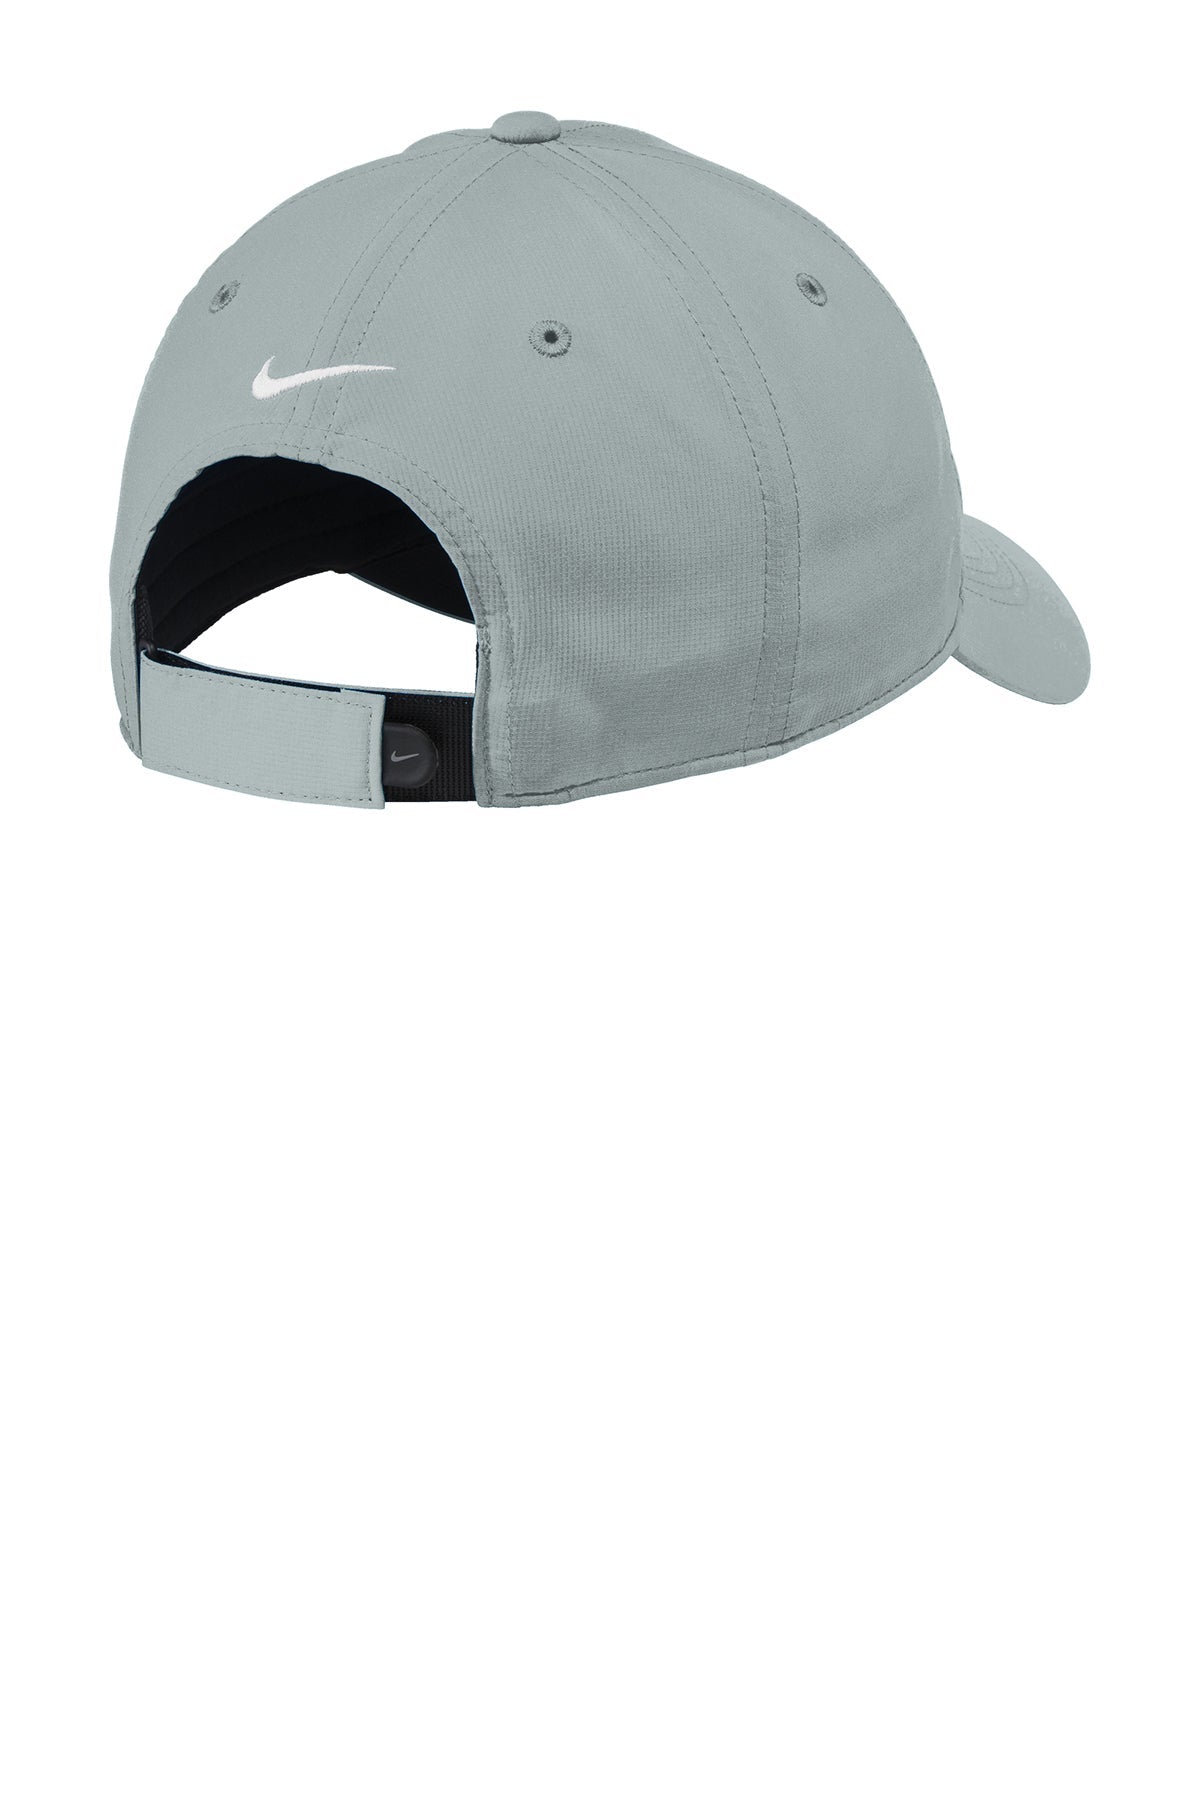 Nike Dri-FIT Tech Custom Caps, Cool Grey